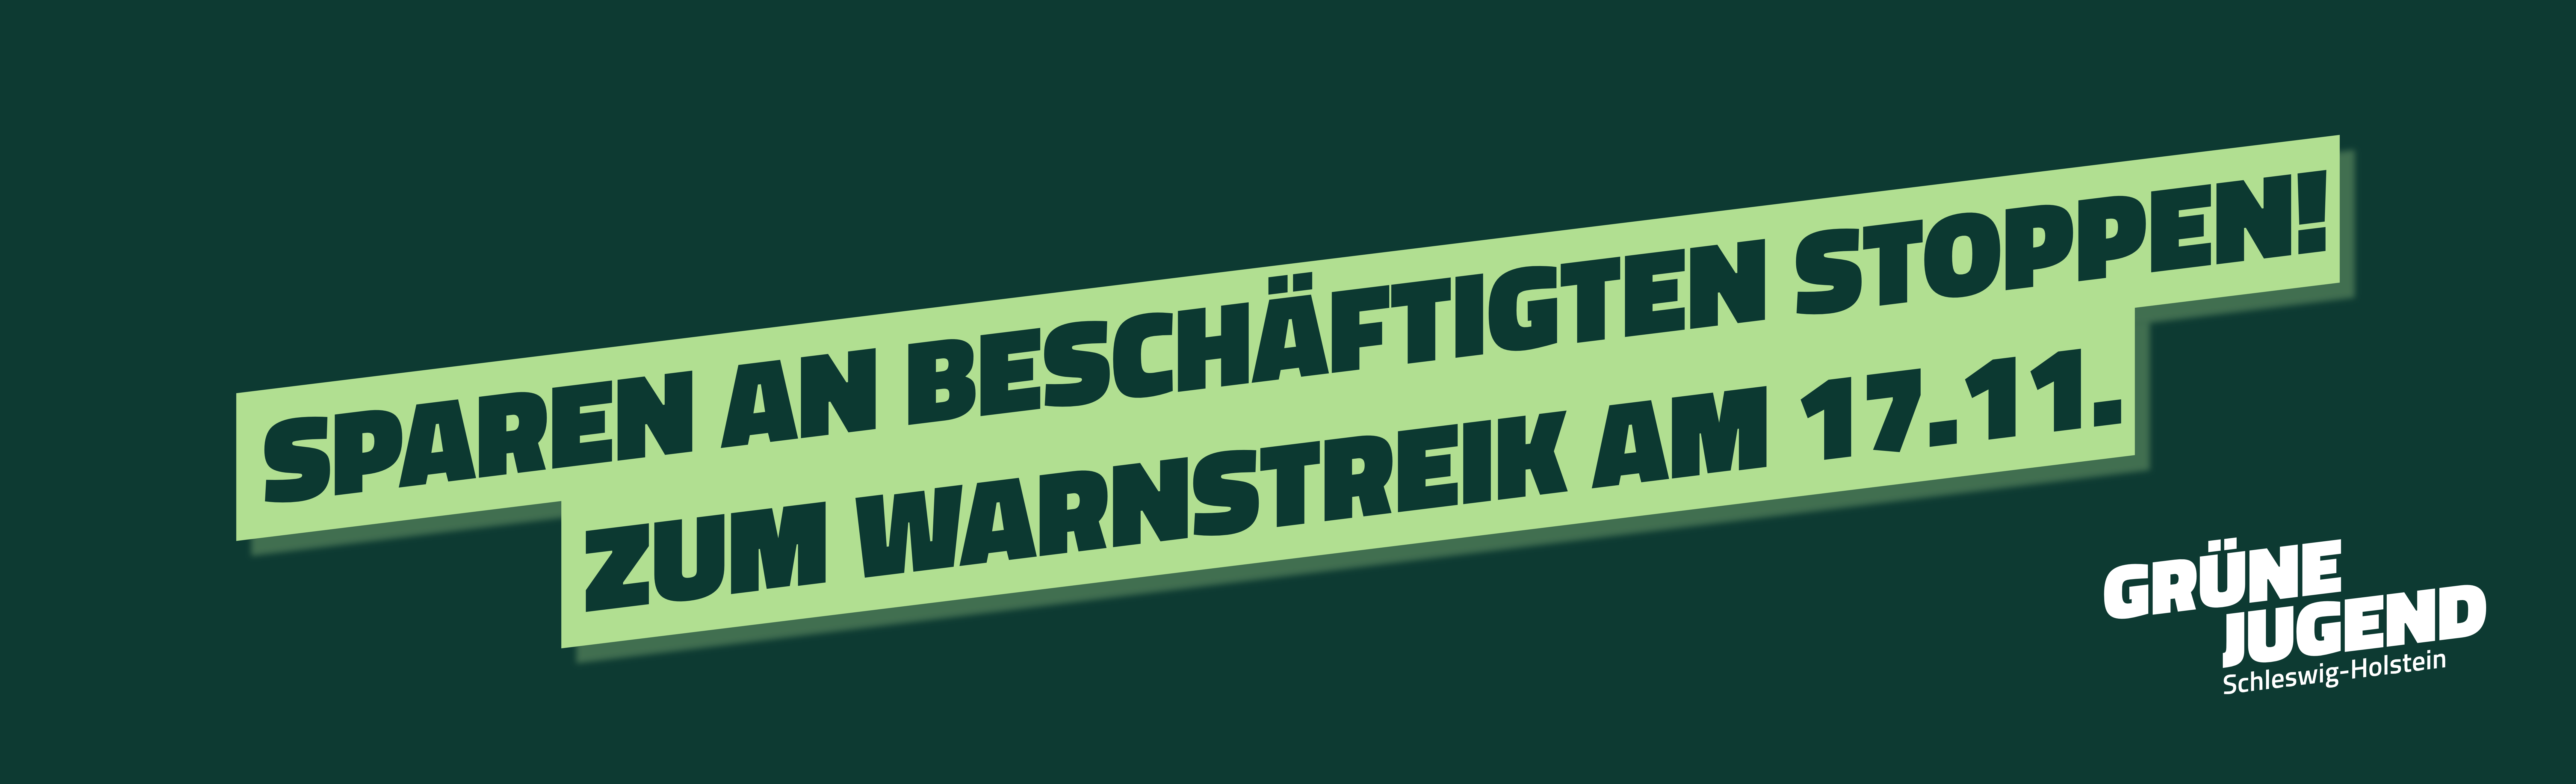 Sparen an Beschäftigten stoppen! GRÜNE JUGEND Schleswig-Holstein zum Warnstreik am 17.11.